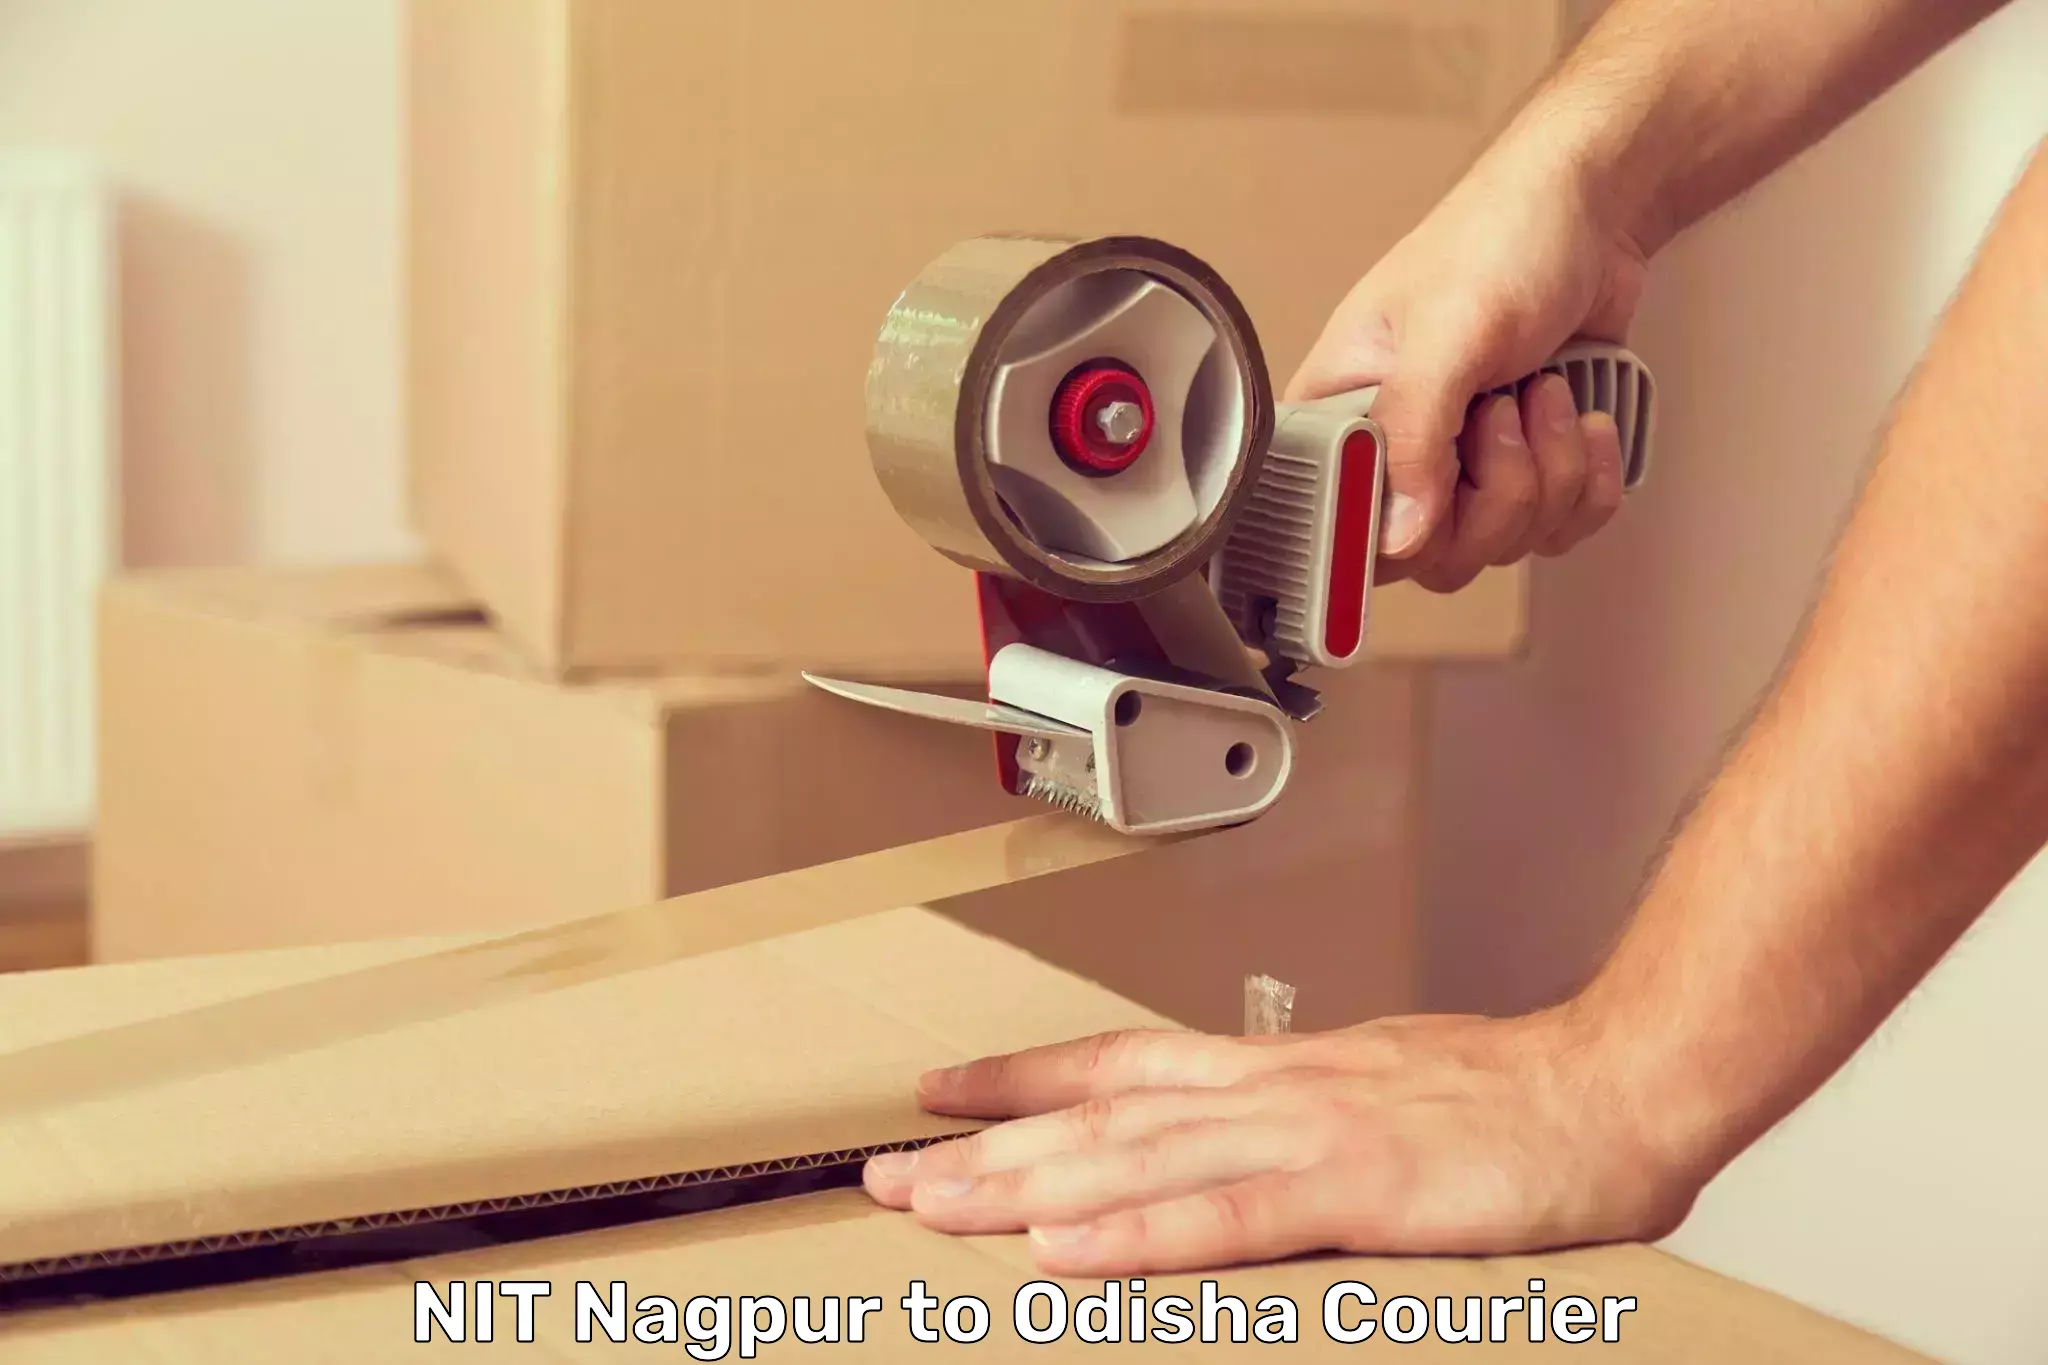 24/7 courier service NIT Nagpur to Sambalpur